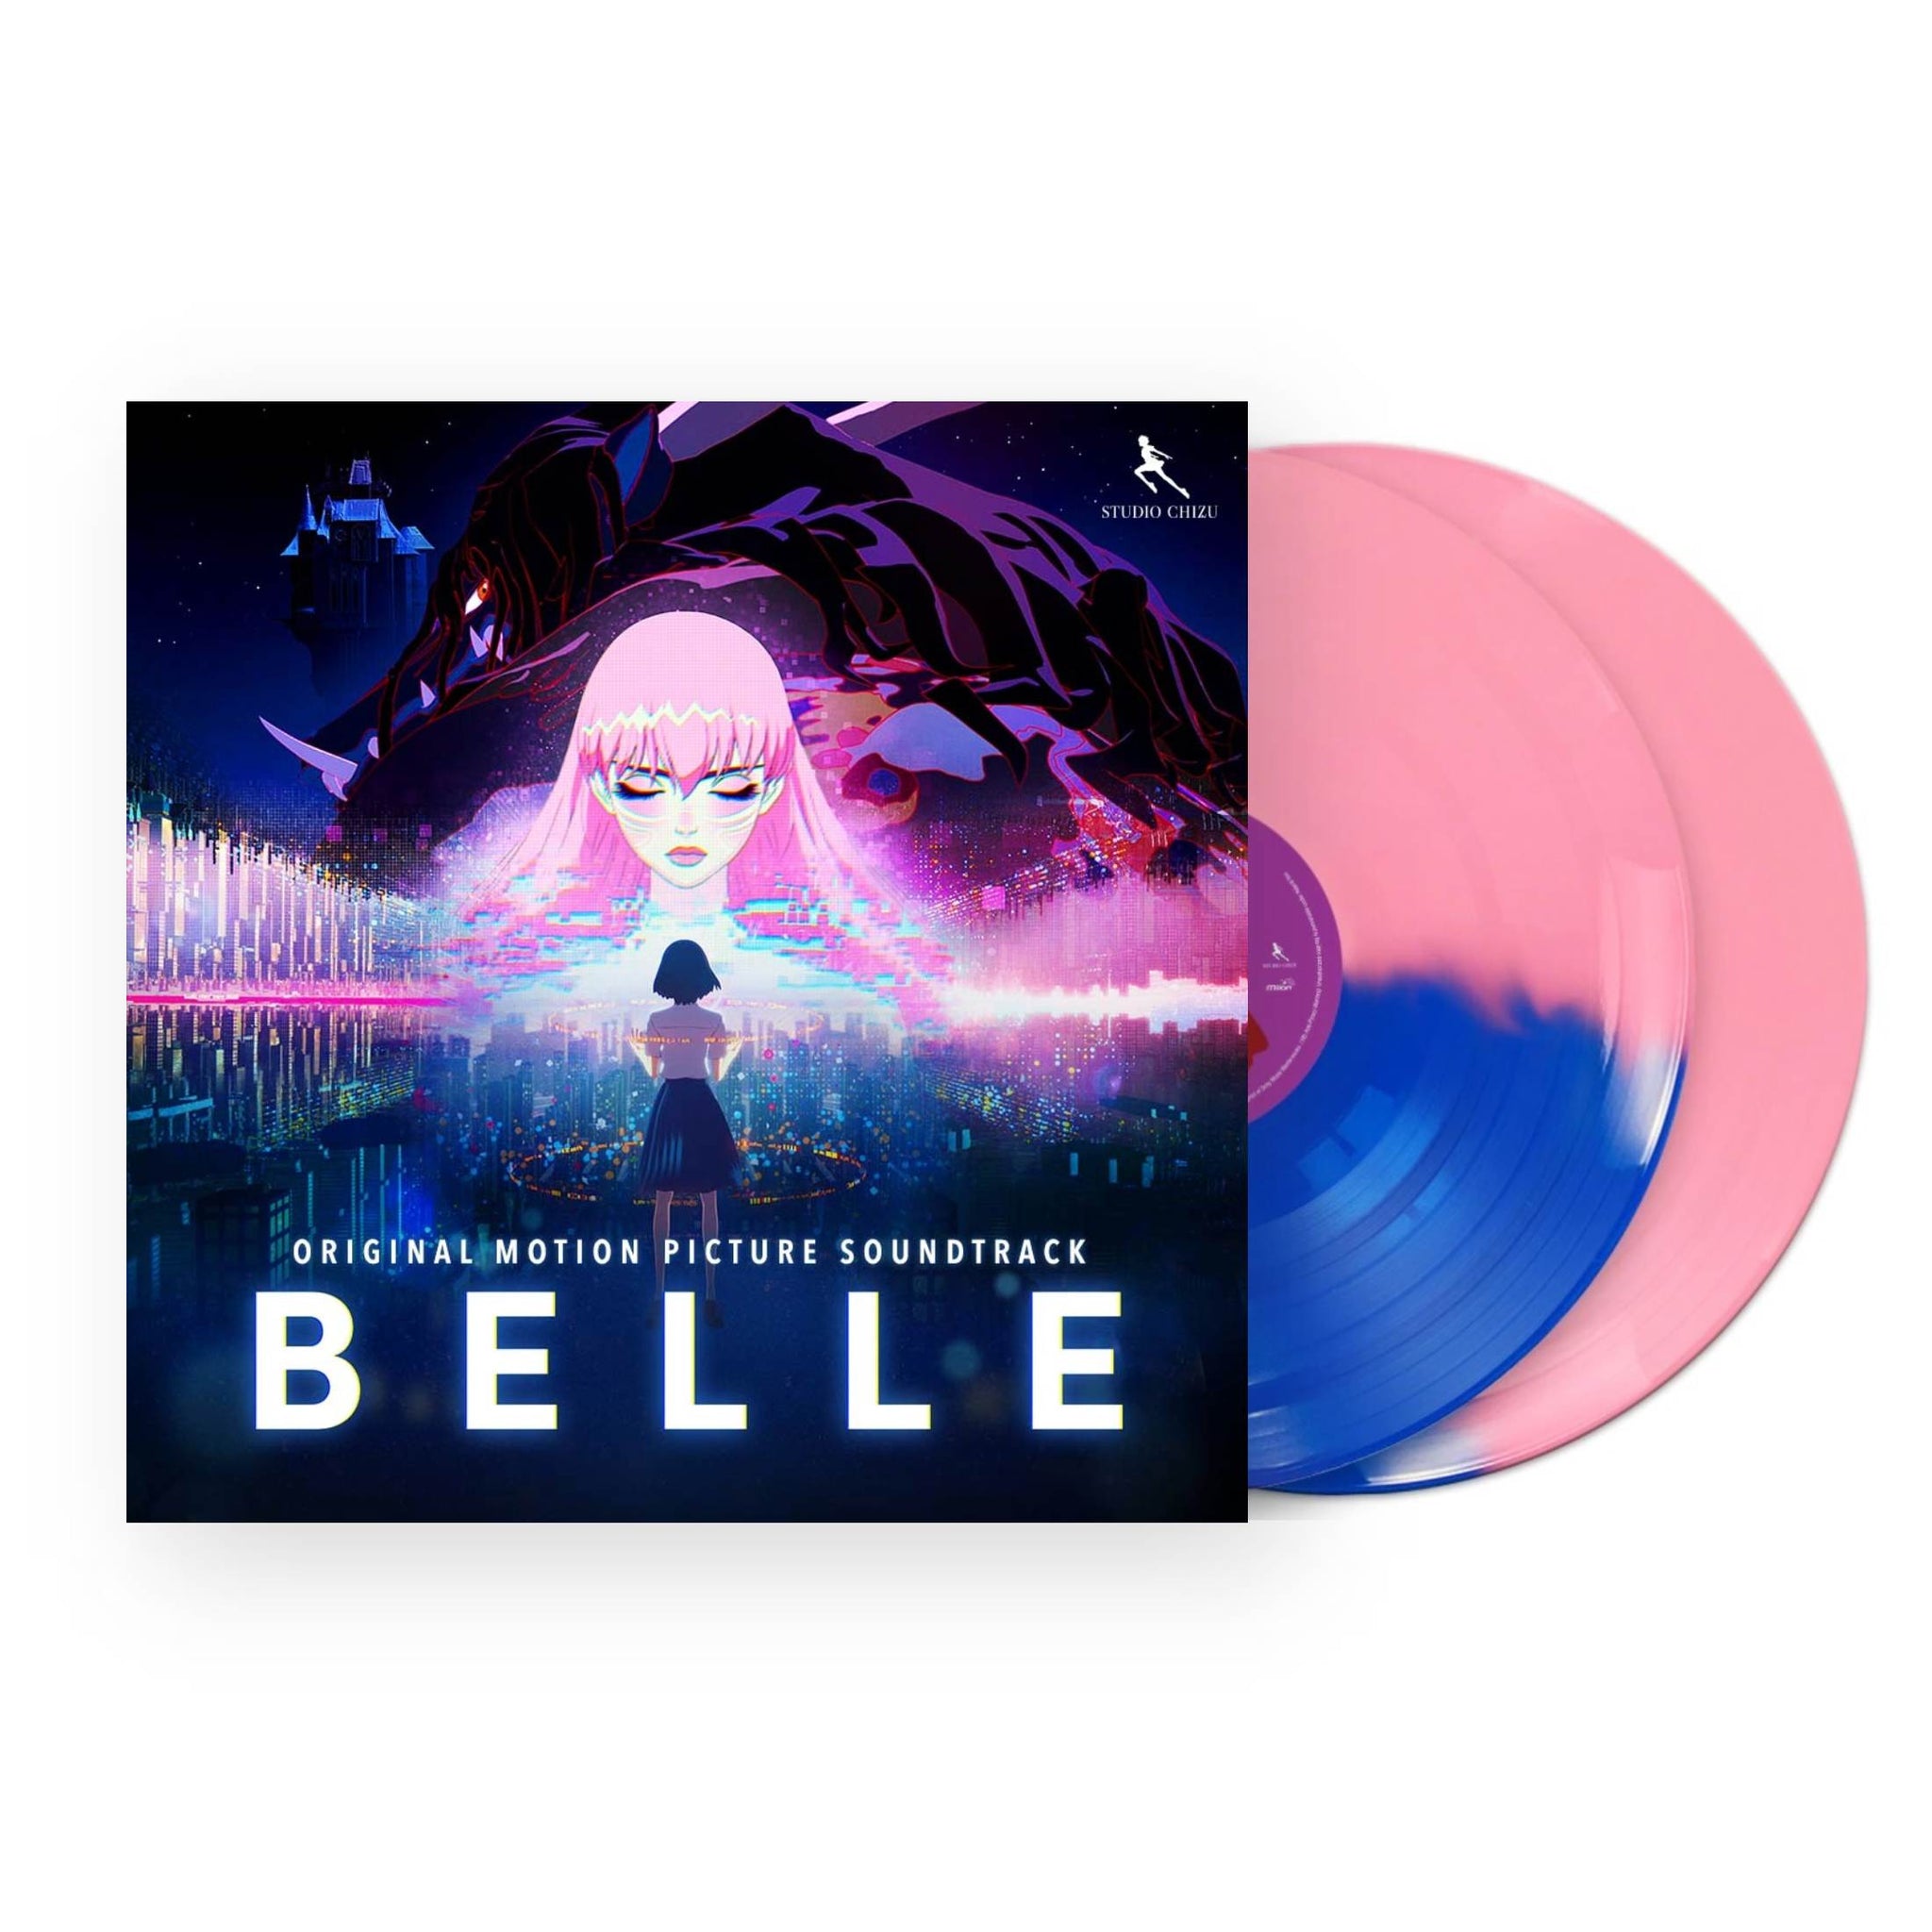 Belle (Original Motion Picture Soundtrack) by Mamoru Hosoda 2xLP (Pink  Blue Vinyl)